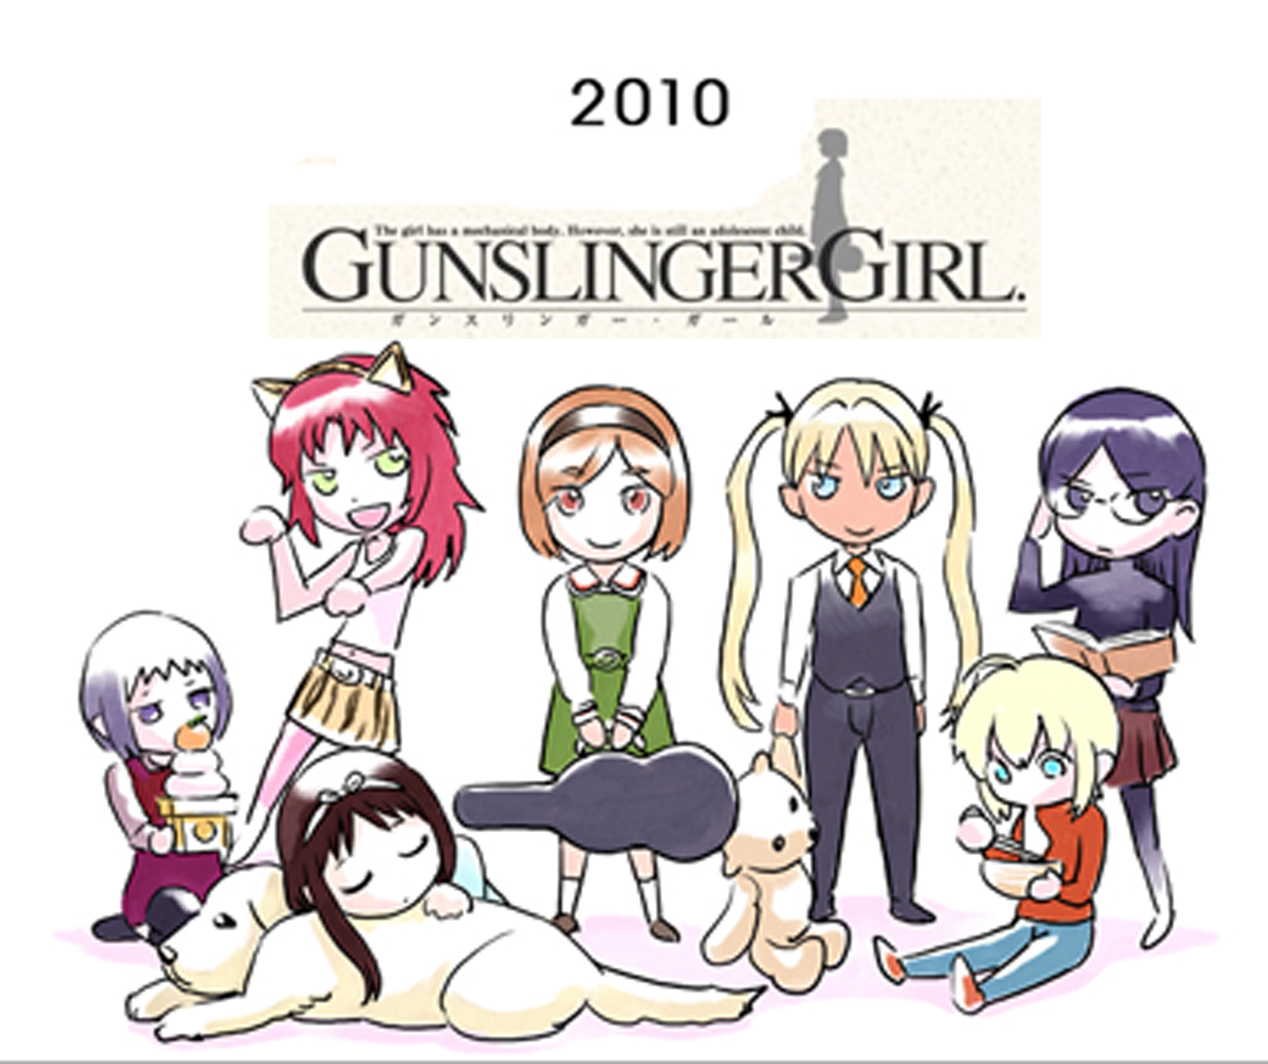 Gunslinger Girl 2010 by ShadowFalcon